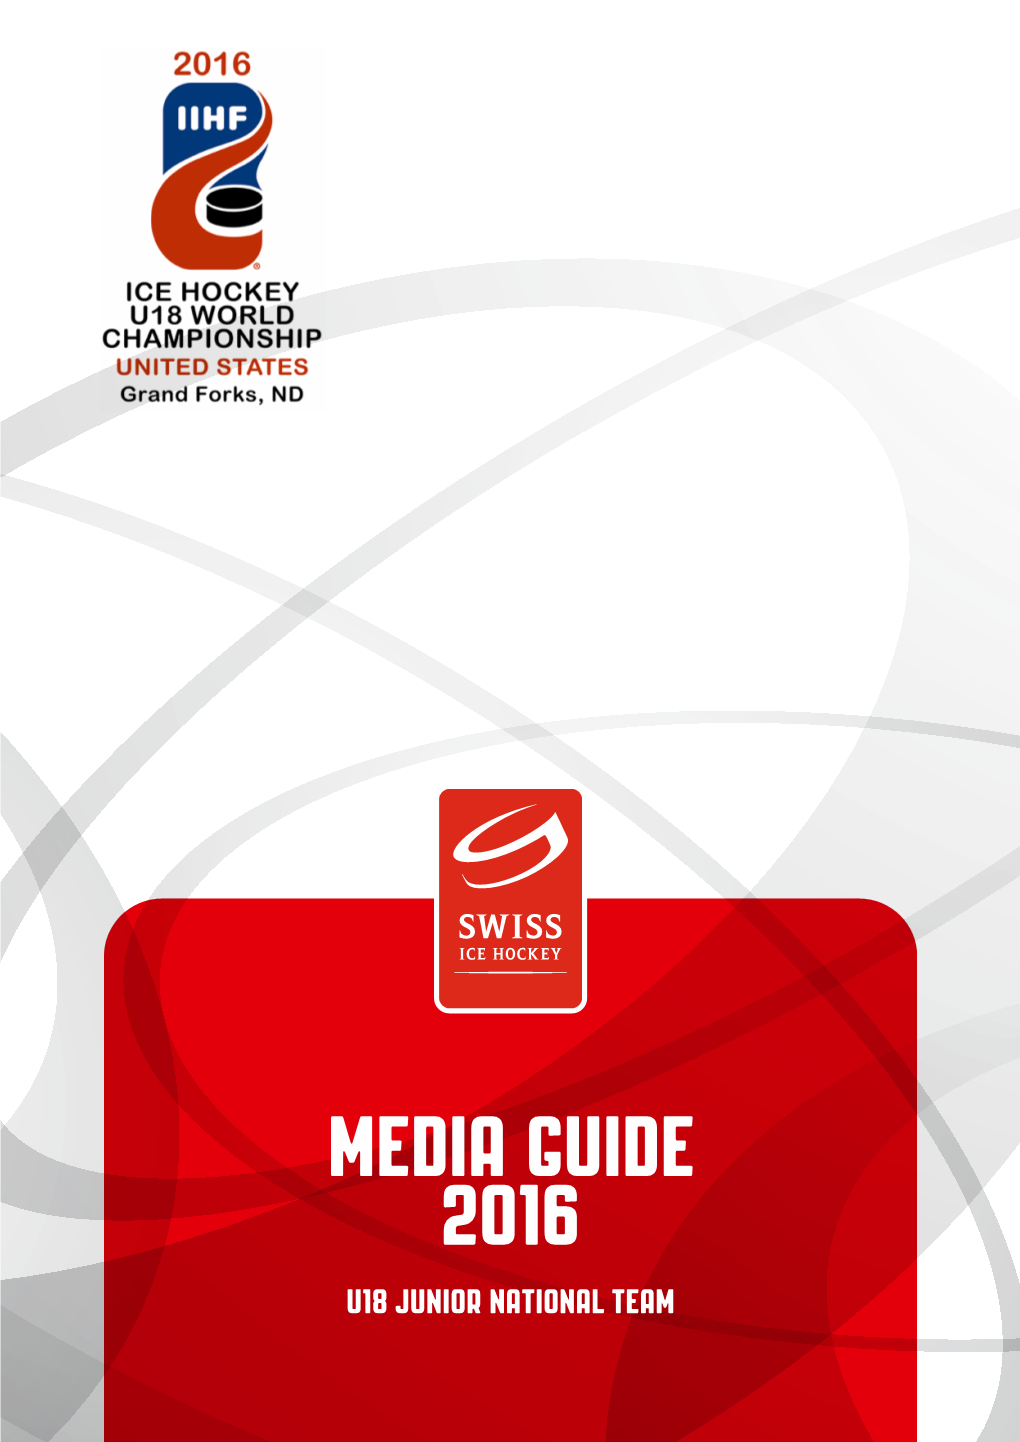 Media Guide 2016 U18 JUNIOR NATIONAL TEAM Coaches Staff